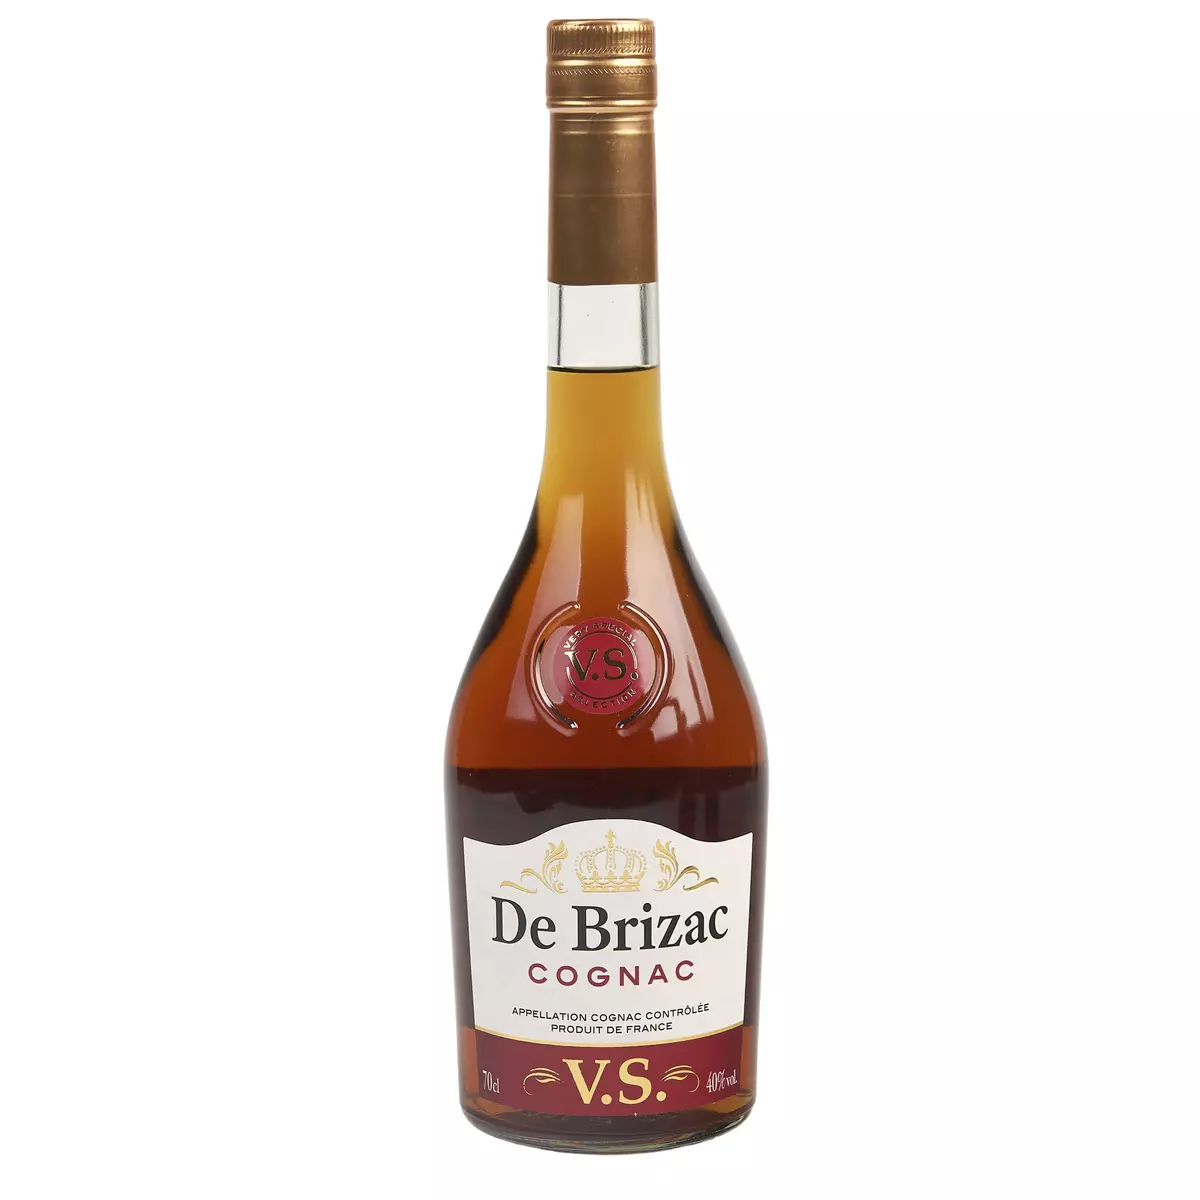 DE BRIZAC Cognac V.S. 40% 70cl